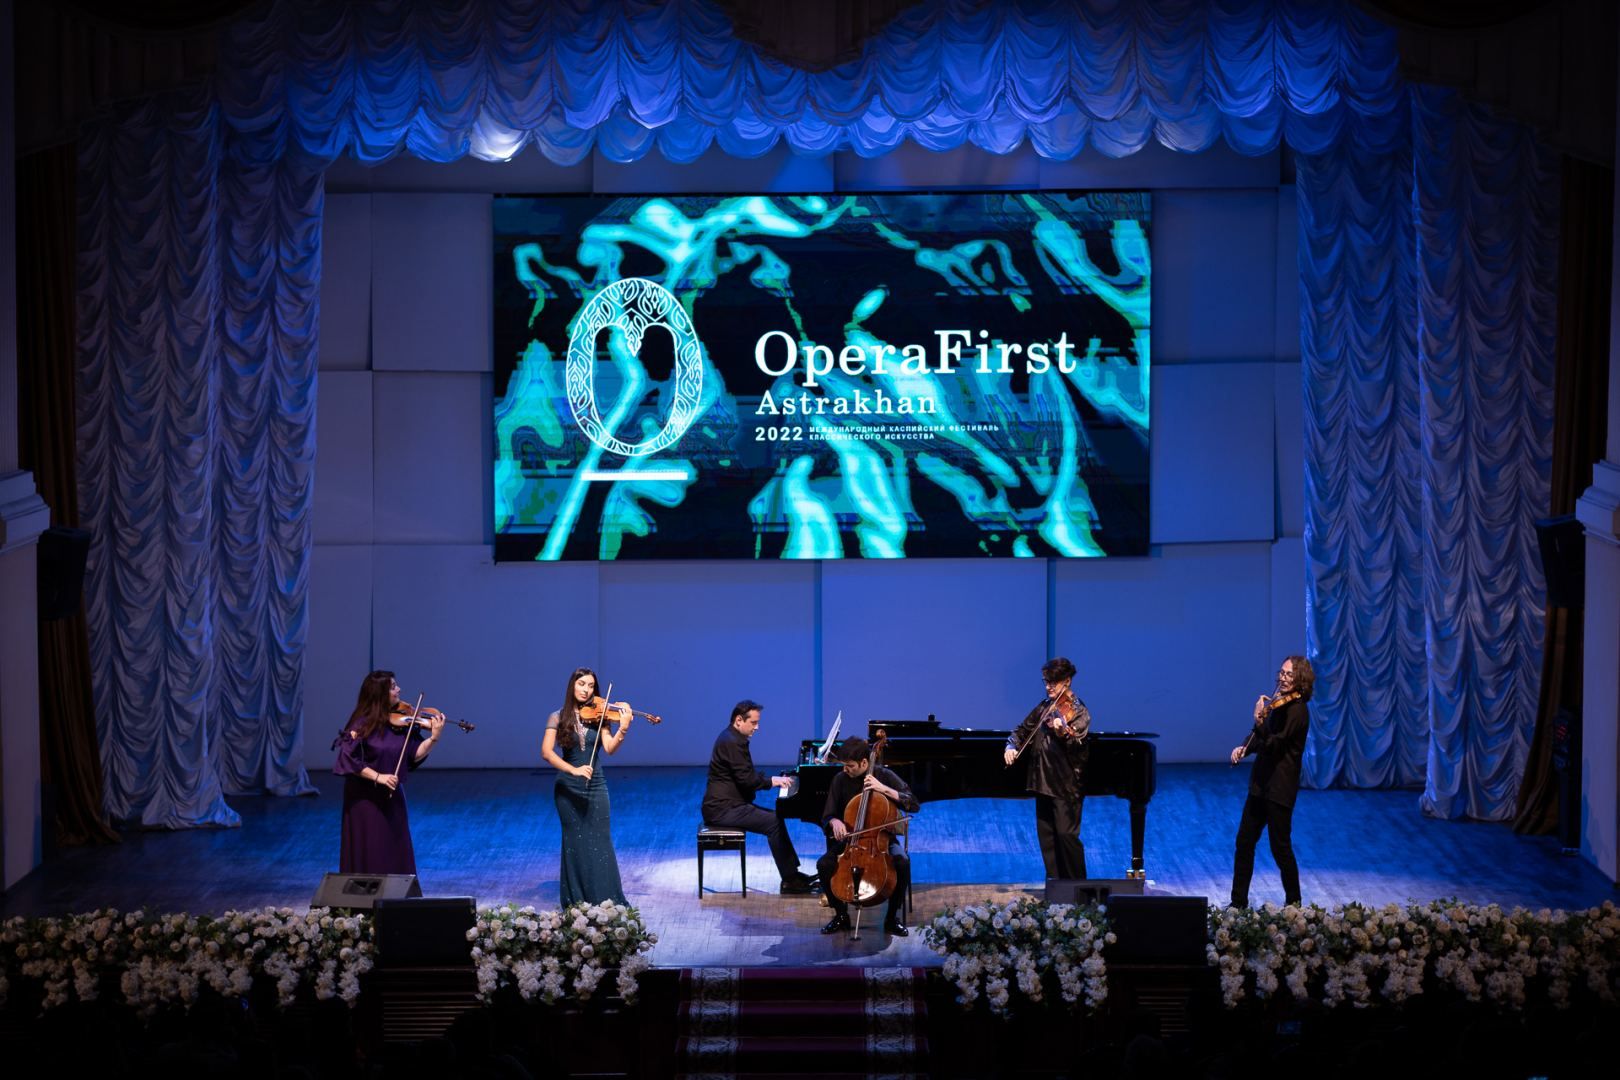 OperaFirst Day of Azerbaijan kicks off in Astrakhan [PHOTO]